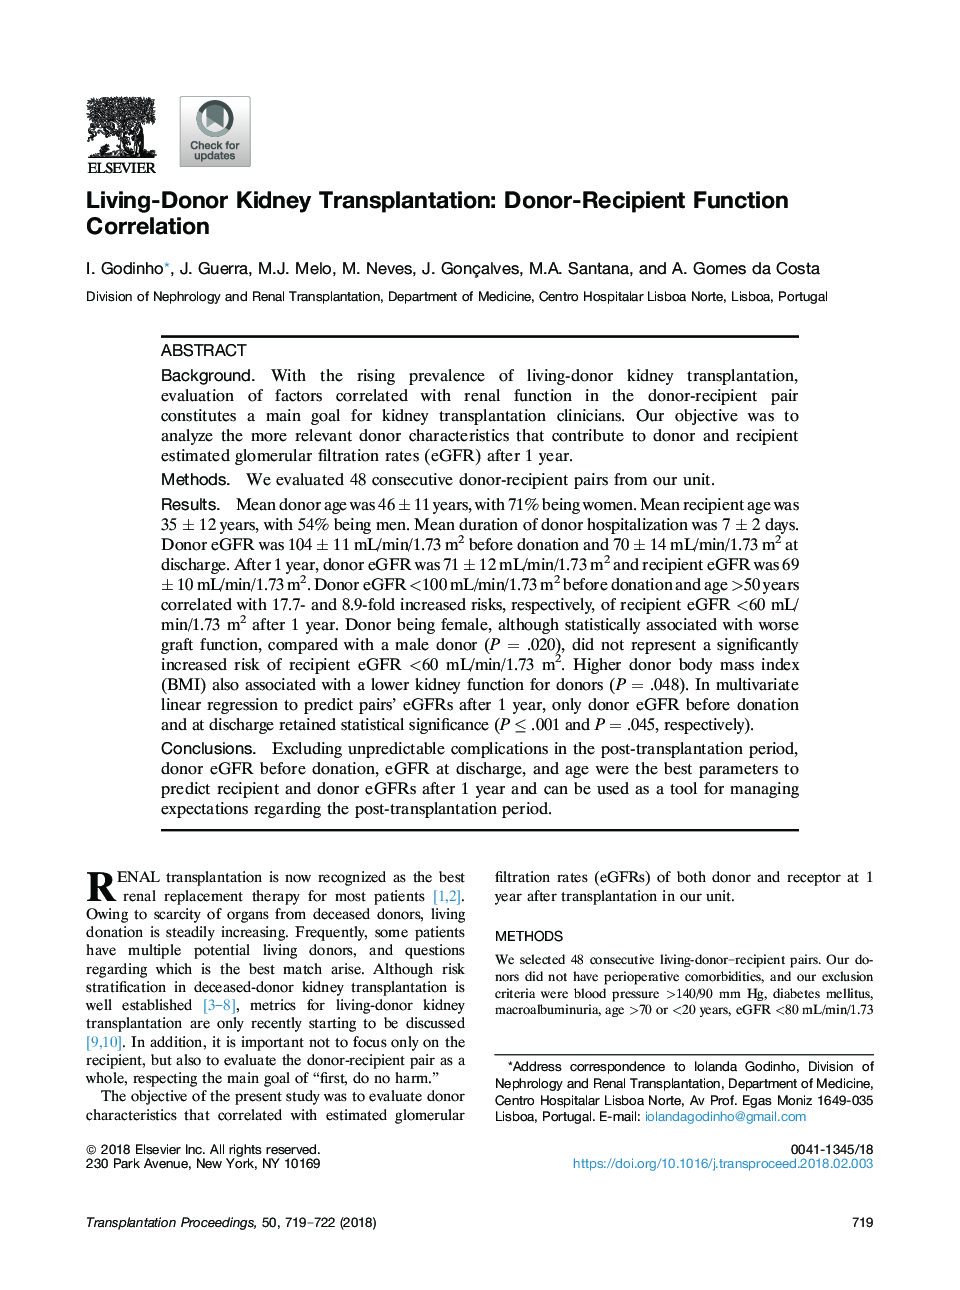 Living-Donor Kidney Transplantation: Donor-Recipient Function Correlation